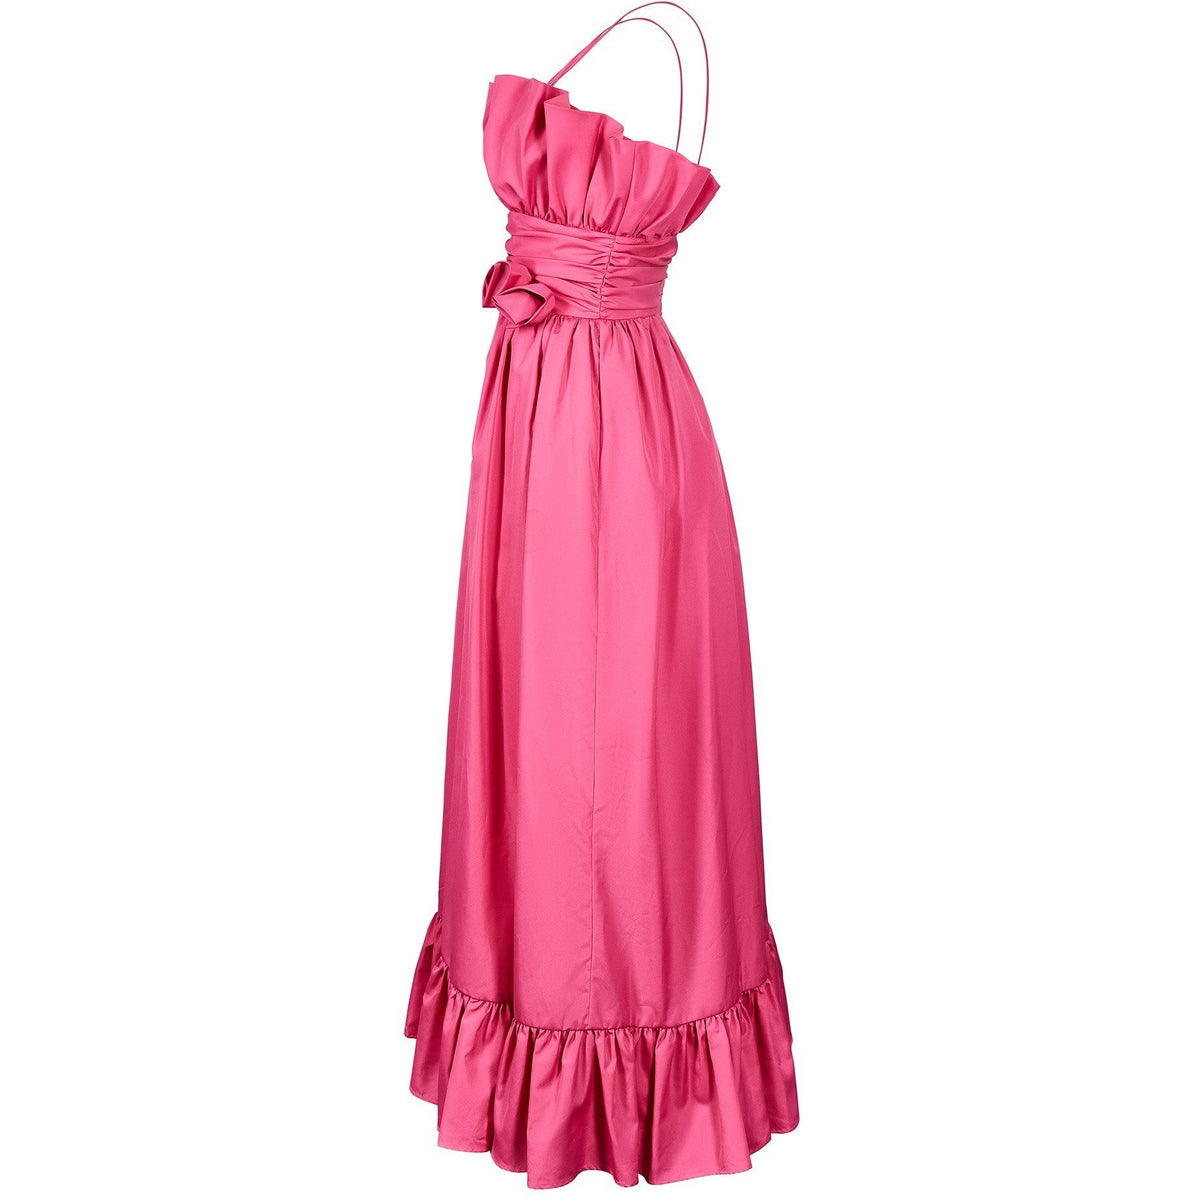 ARCHIVE - 1980s John Charles Pink Taffeta Ballgown Dress | CIRCA ...